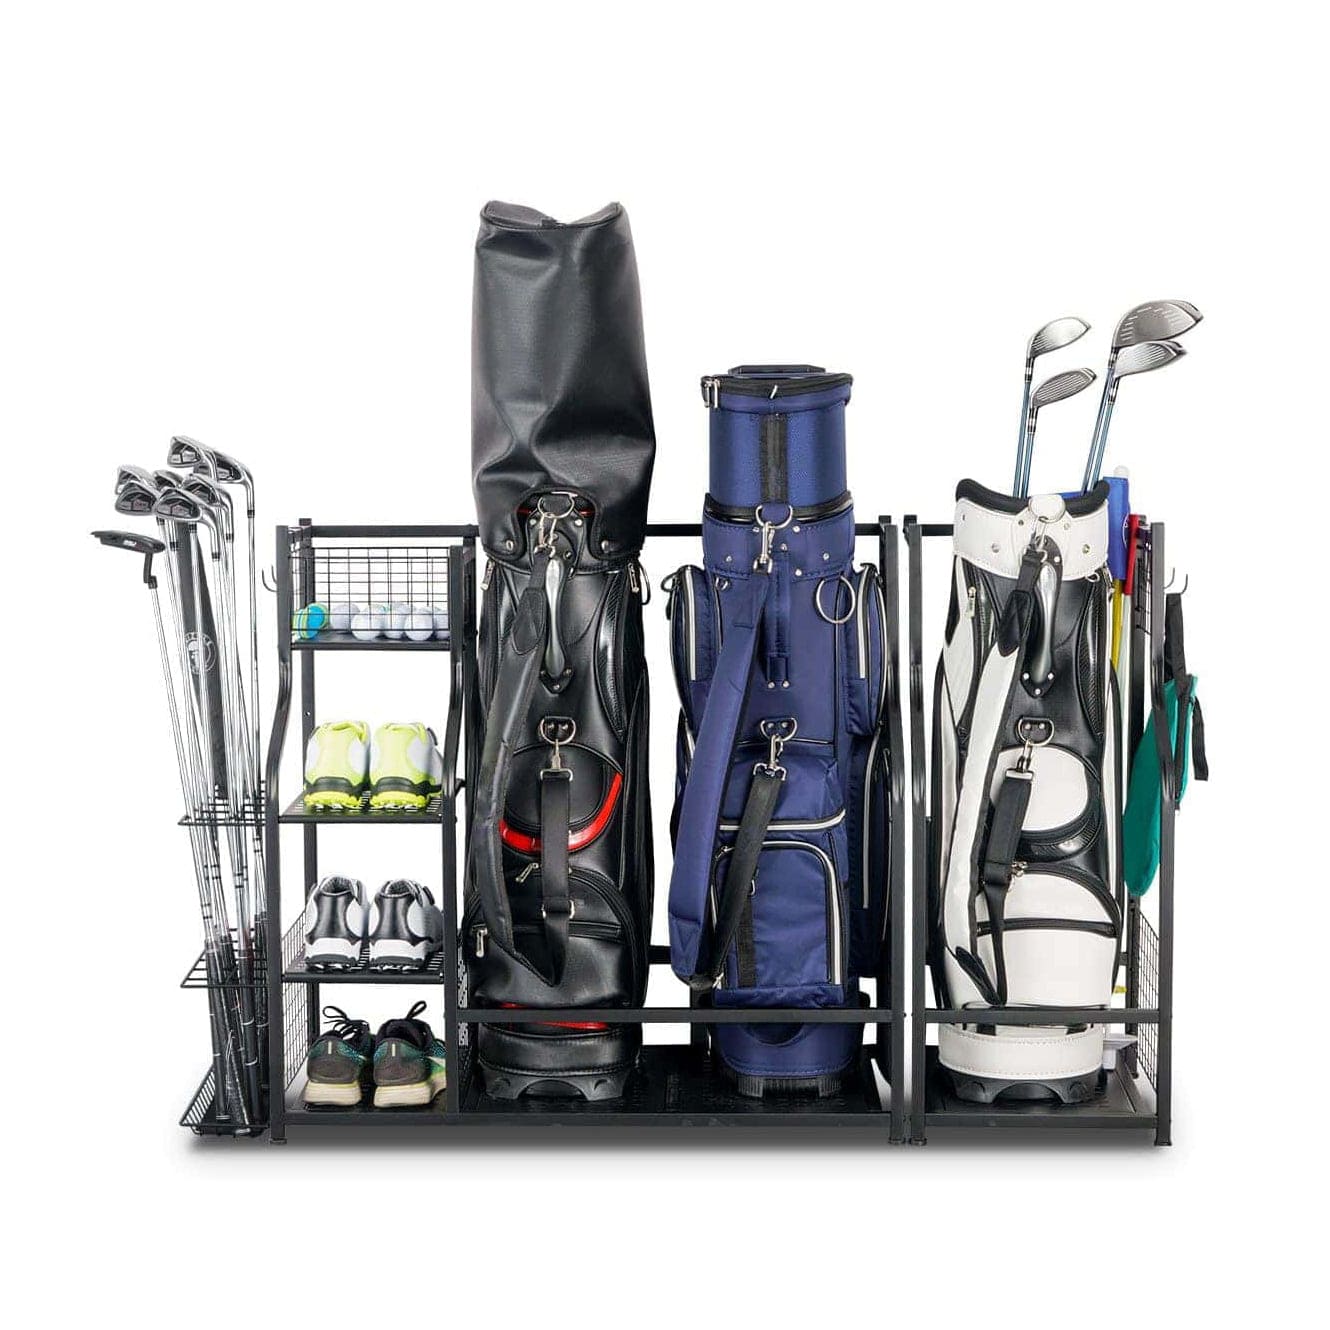 Sttoraboks Golf Bags Storage Garage Organizer Golf Bag Rack for 3 Golf Bags  and Golf Equipment Accessories Golf Club Storage Stand GF-002-D23 - The  Home Depot